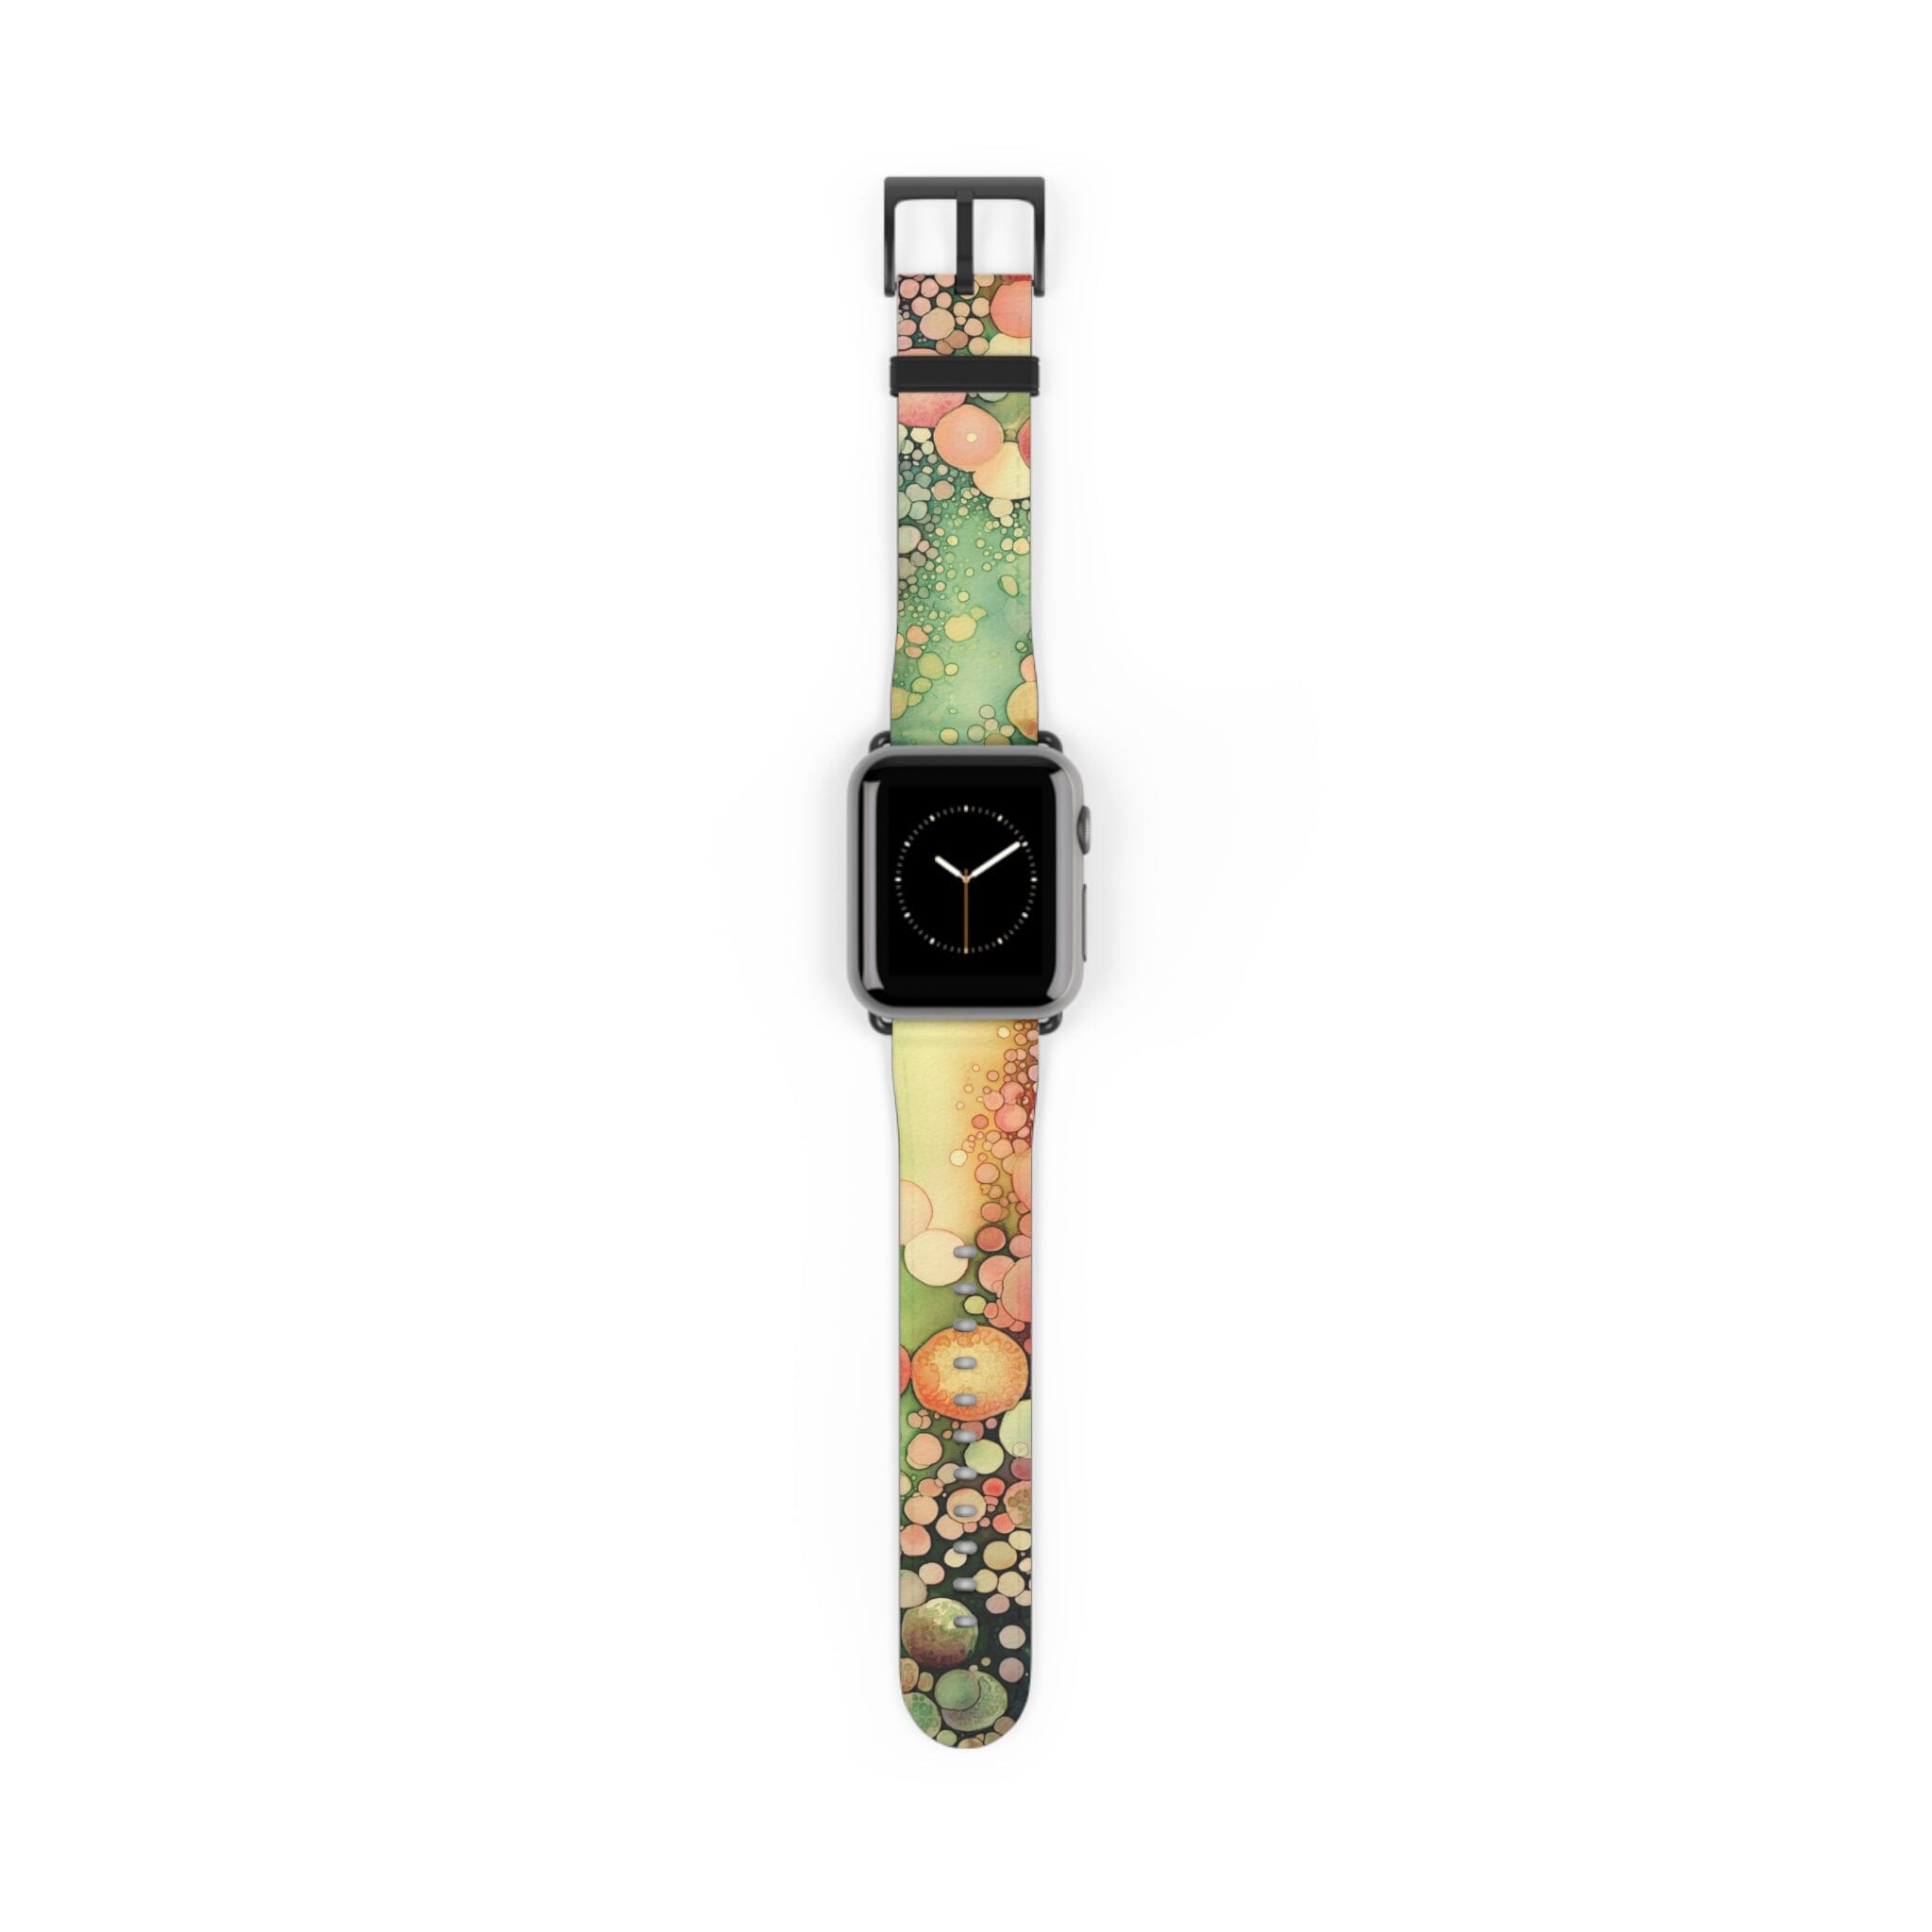 Abstract Vice Versa - Apple Watch Band - buymecool